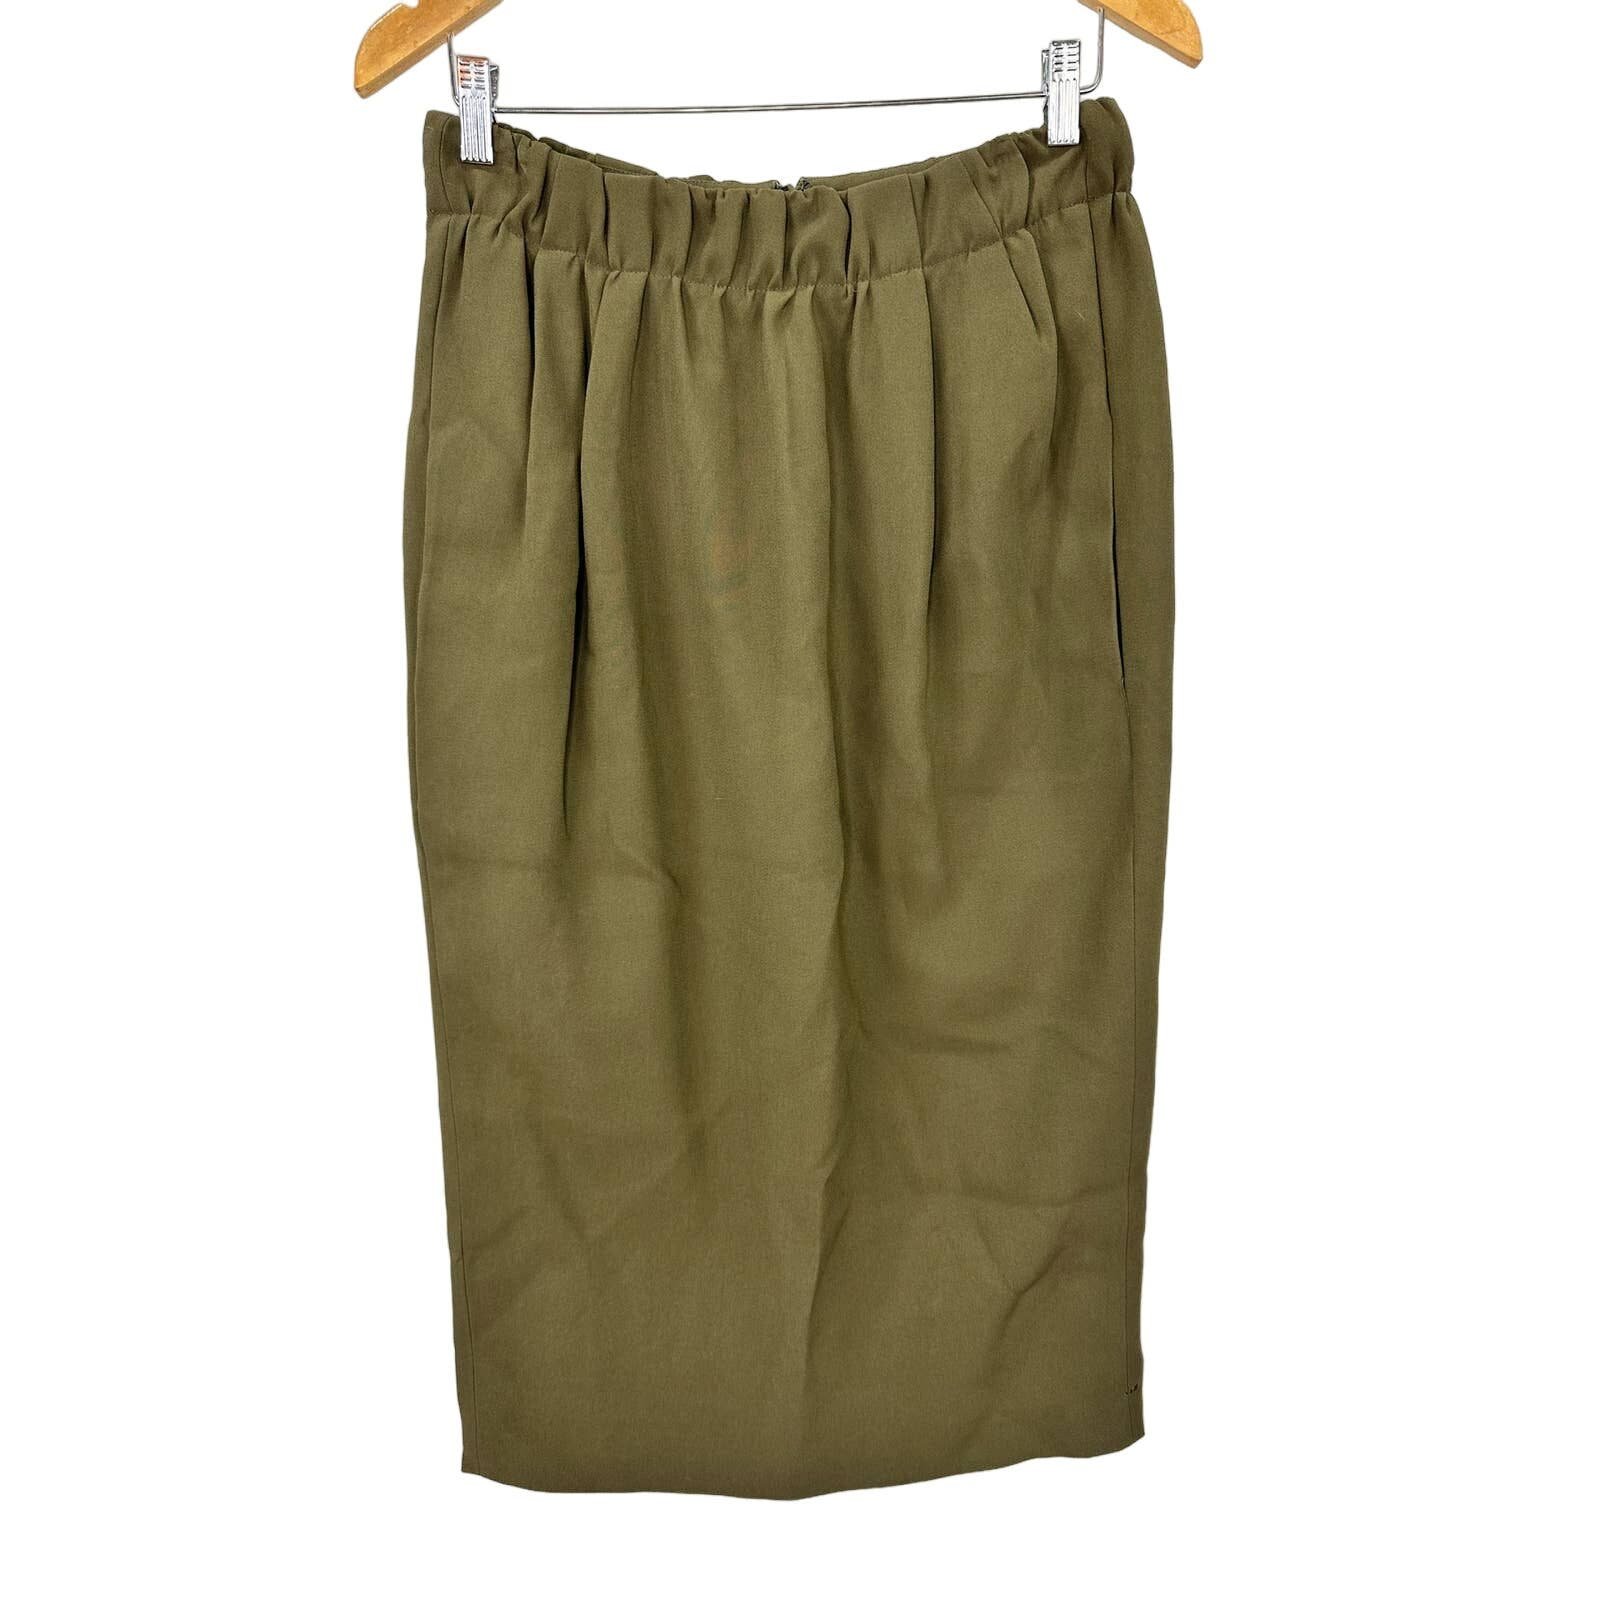 Elegant No. 21 Cotton Poplin Pencil Skirt Green Vented 